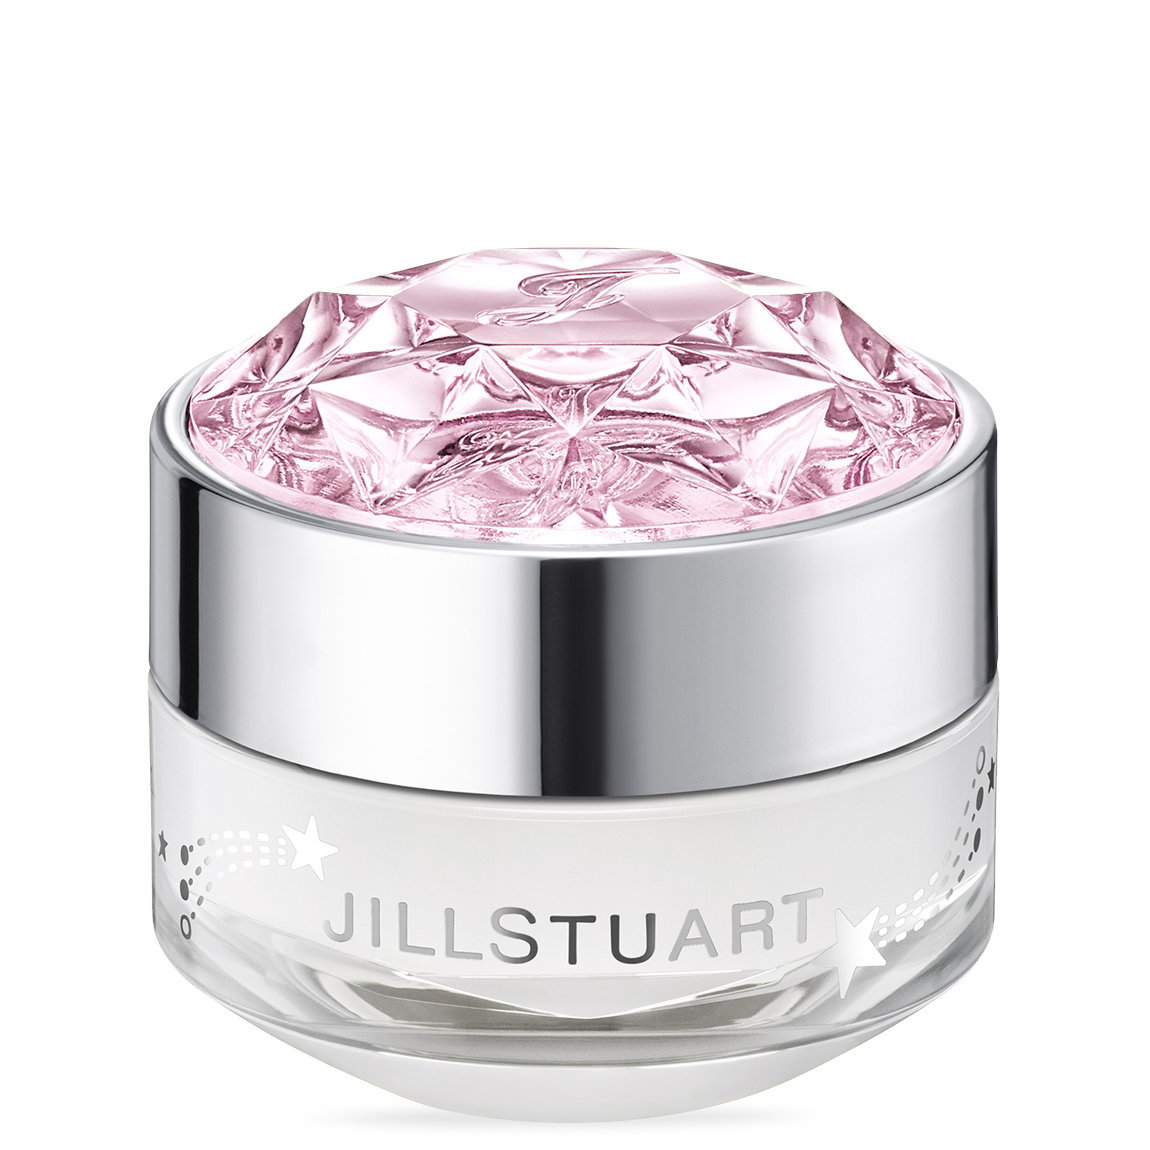 JILL STUART Beauty Dreamy Stars Gift Lip Balm White Floral alternative view 1 - product swatch.